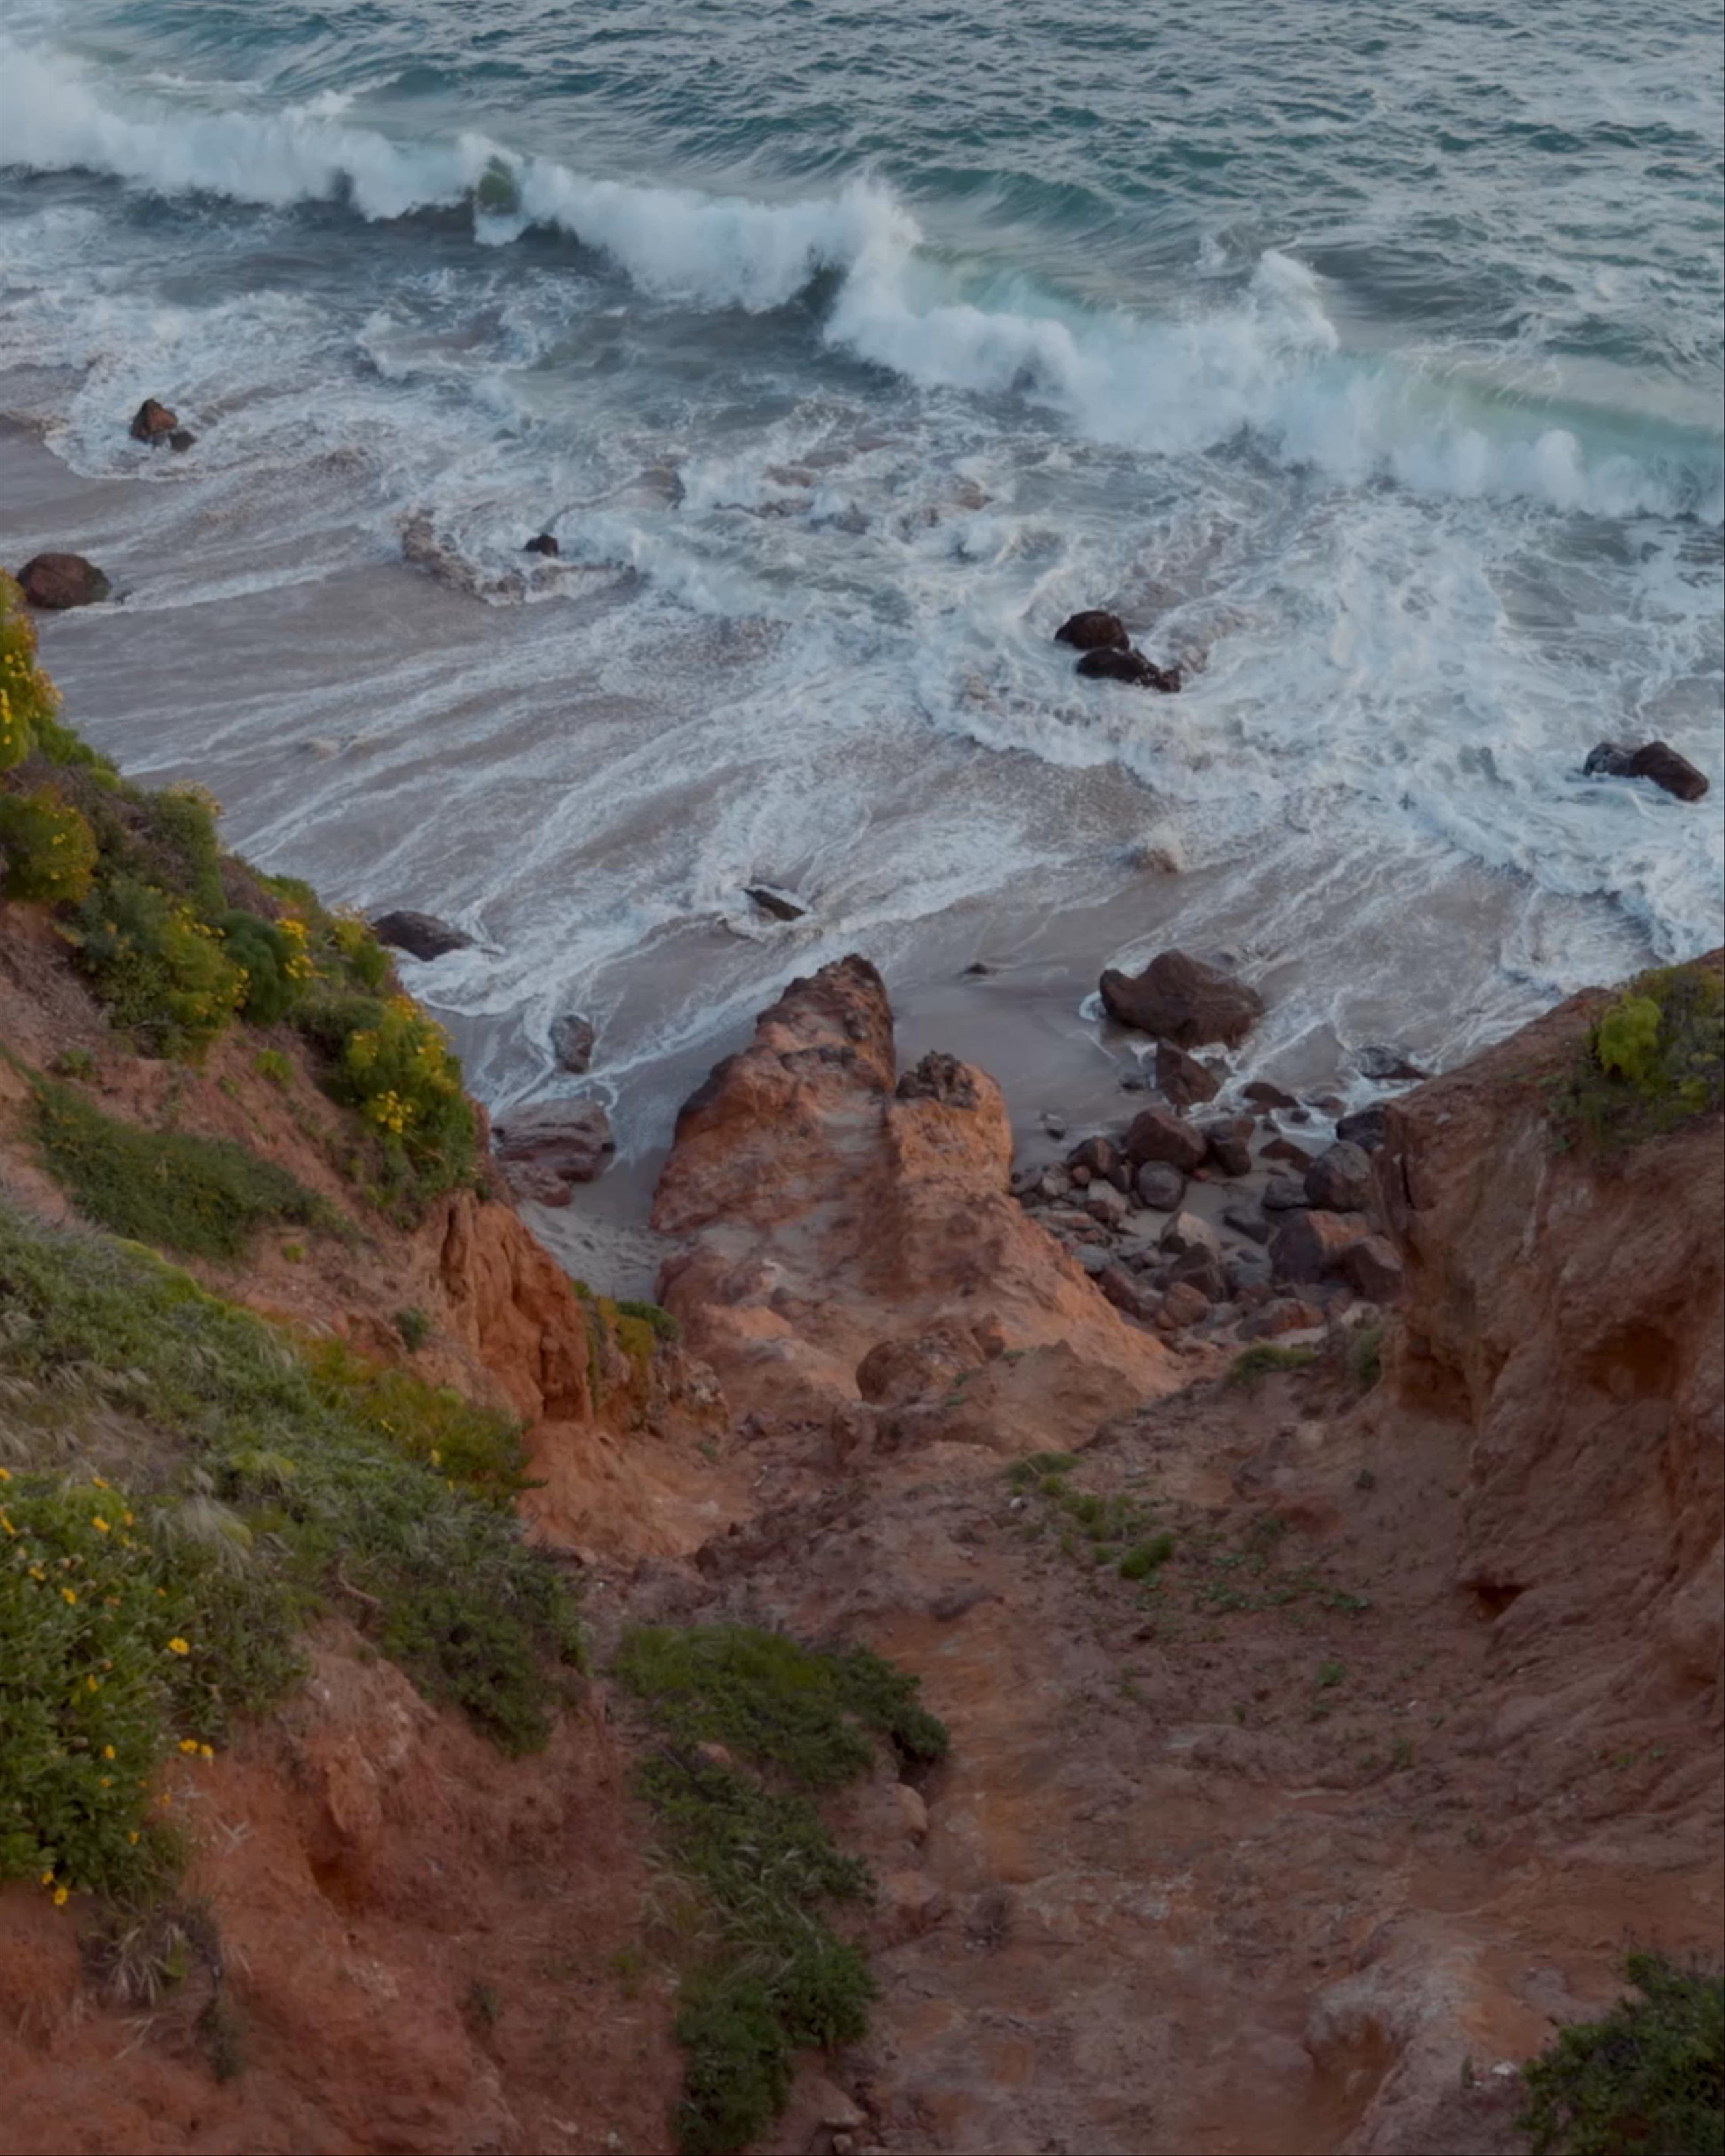 Video of waves crashing on Malibu shore